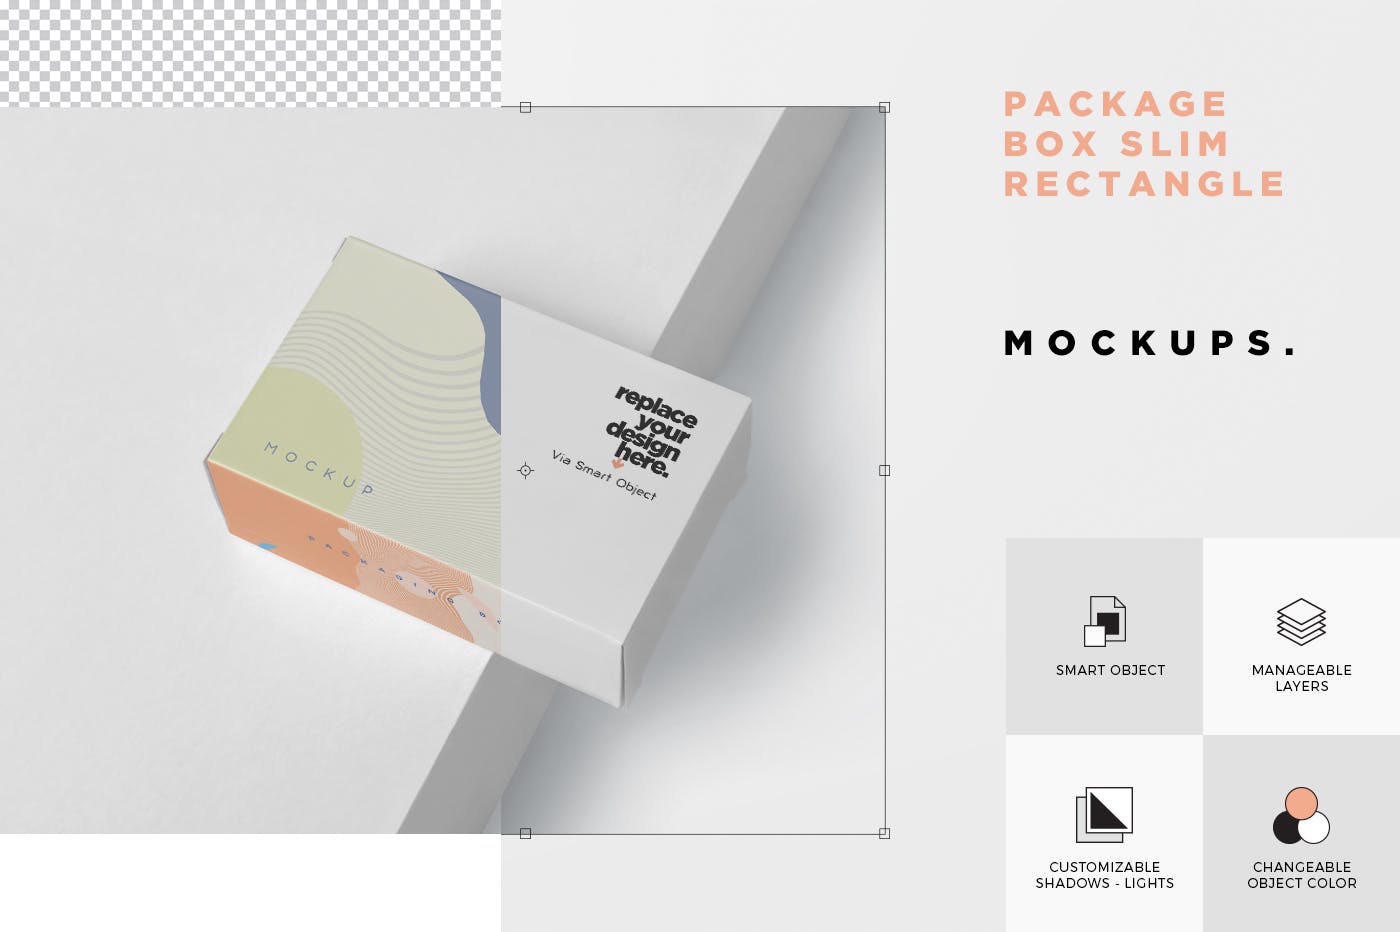 扁平矩形产品包装盒效果图素材库精选 Package Box Mockup – Slim Rectangle Shape插图(6)